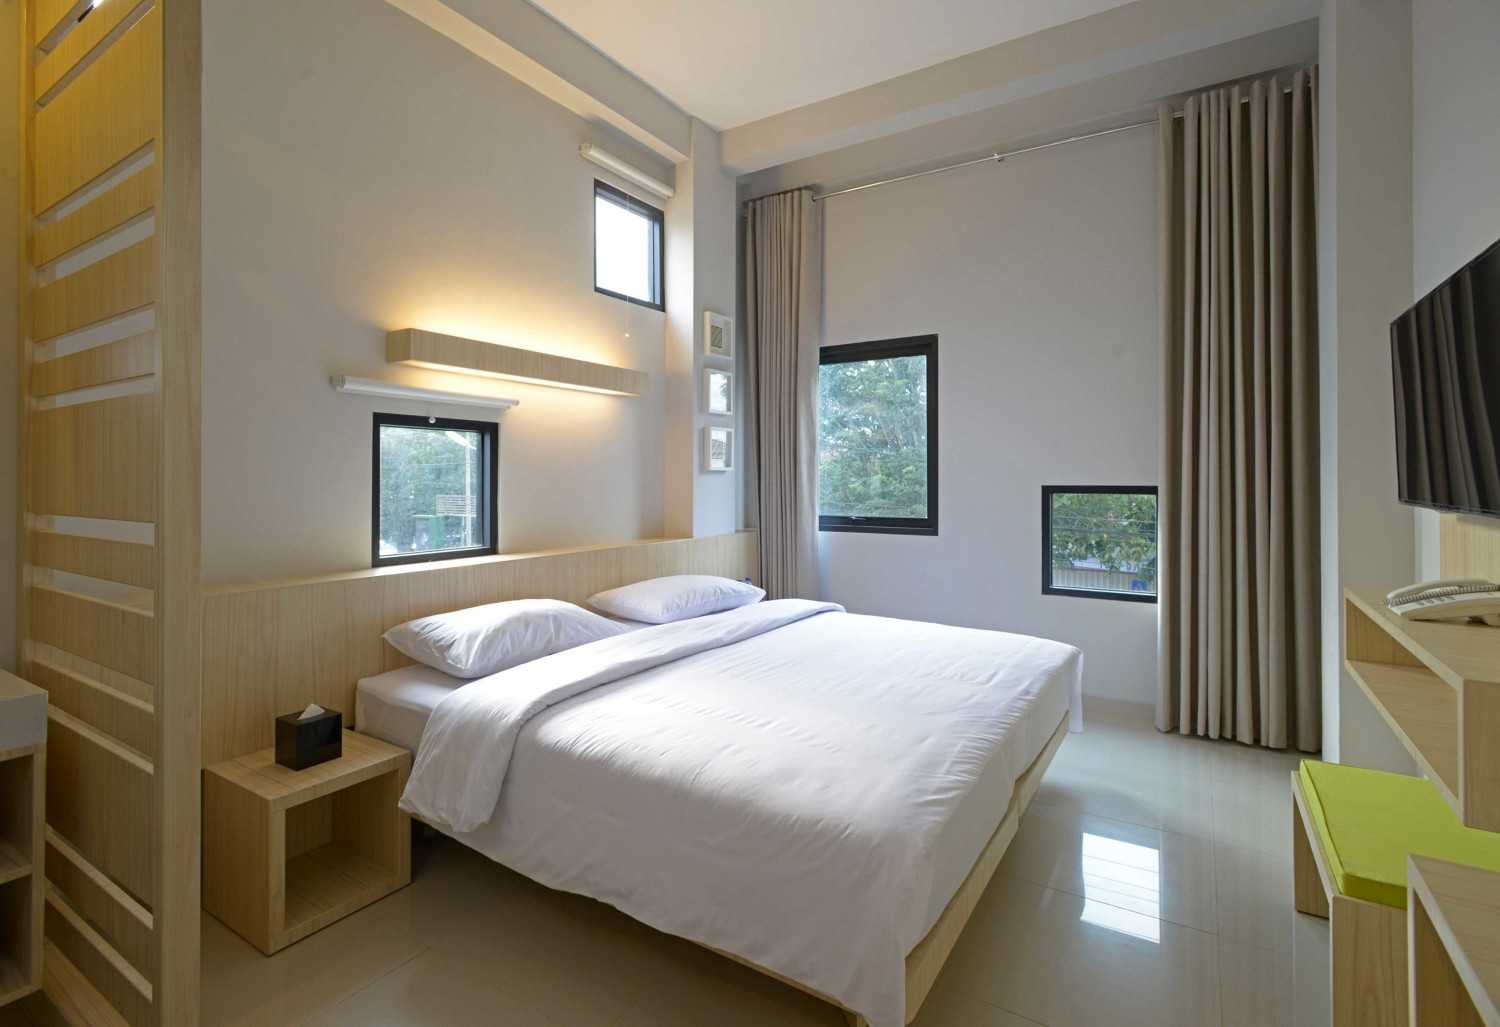 57 Kumpulan Desain Kamar Hotel Minimalis Terbaru 2020